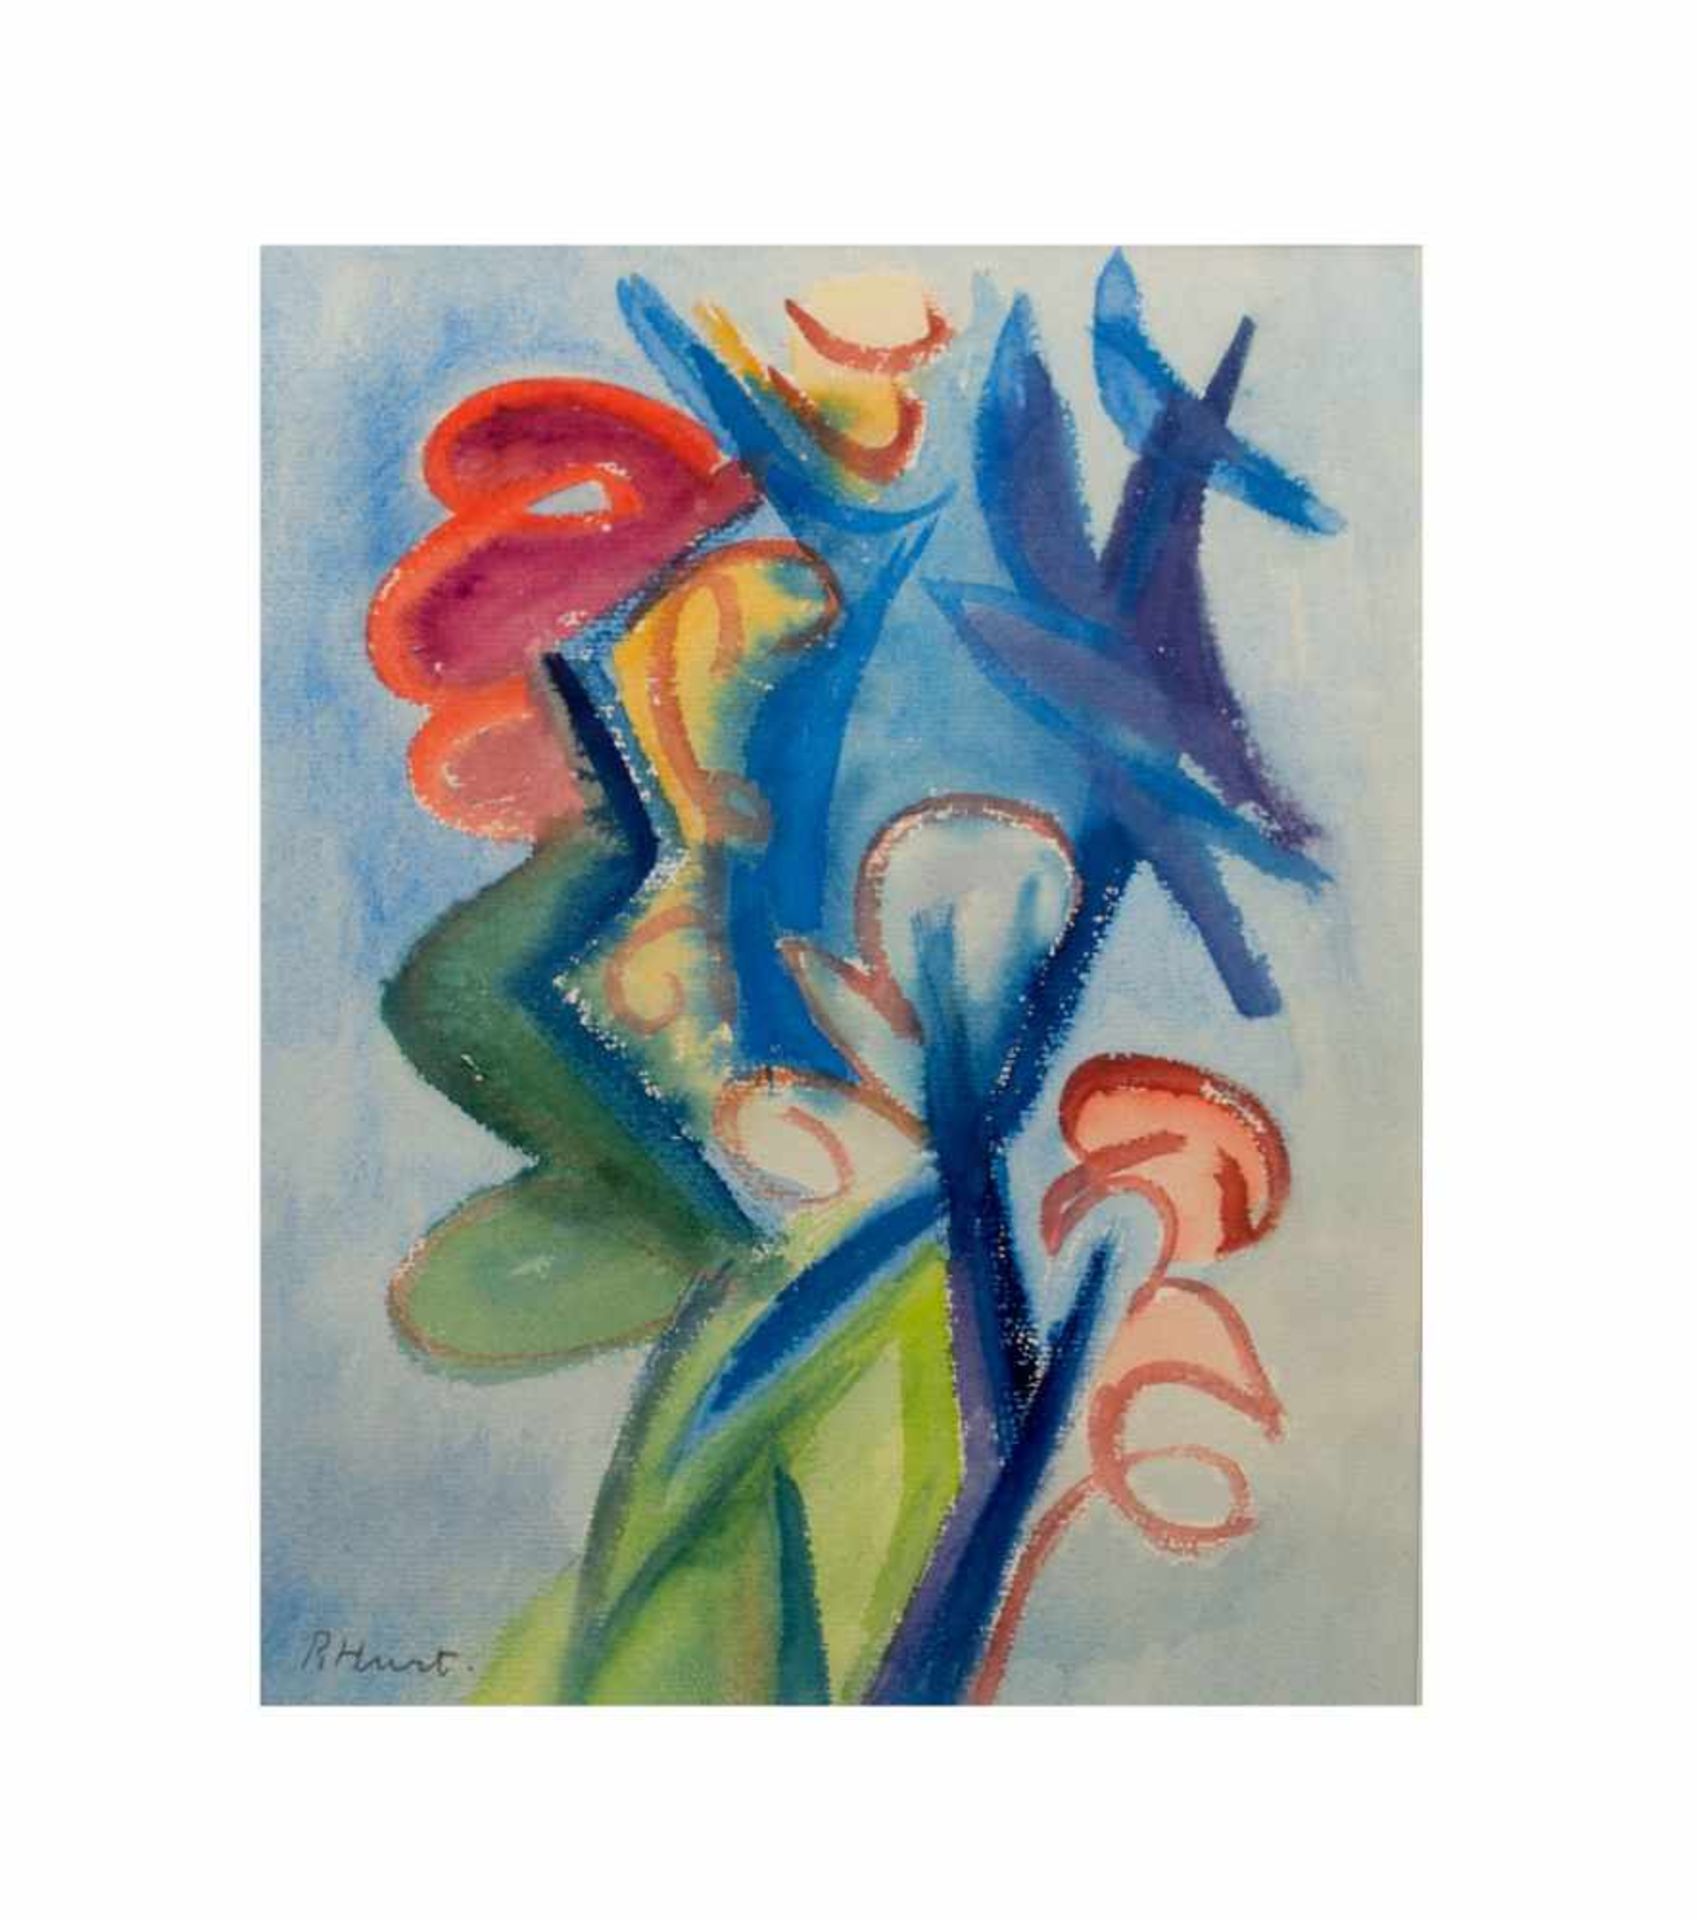 P. Hurt (20. Jh.)Abstraktes Blumenstillleben, Aquarell auf Papier, 35,5 cm x 28,5 cm